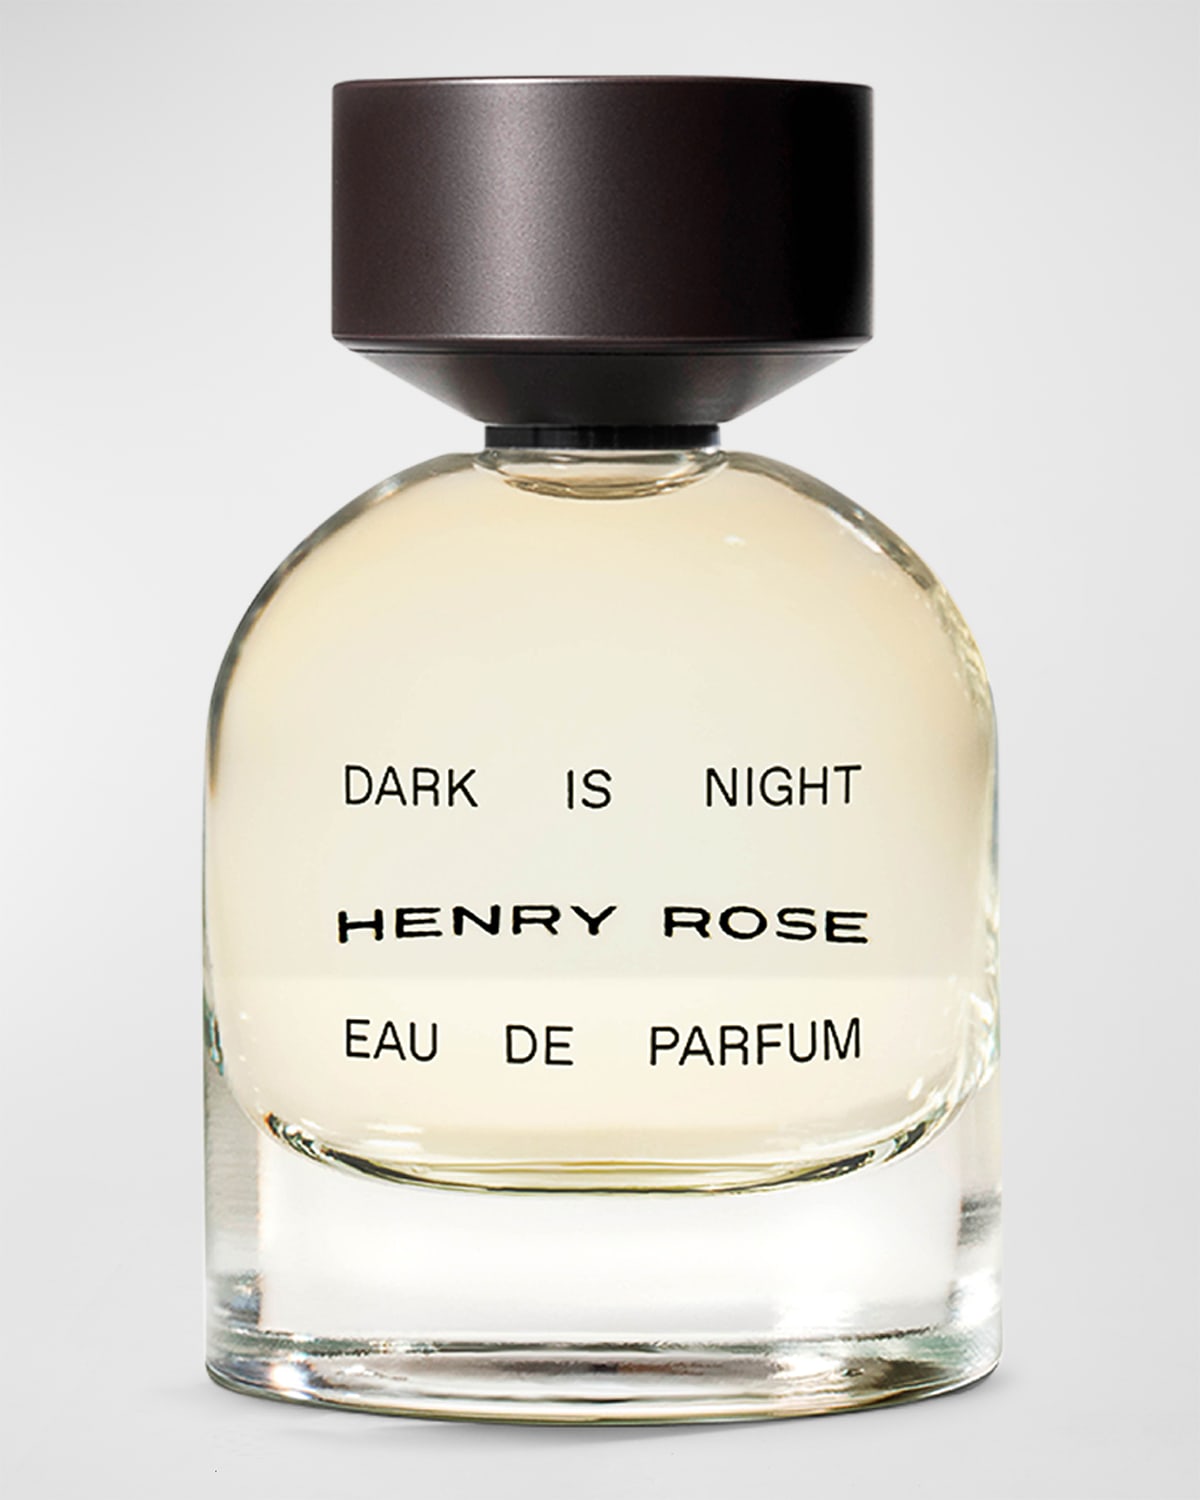 HENRY ROSE Dark Is Night Eau de Parfum, 1.7 oz.